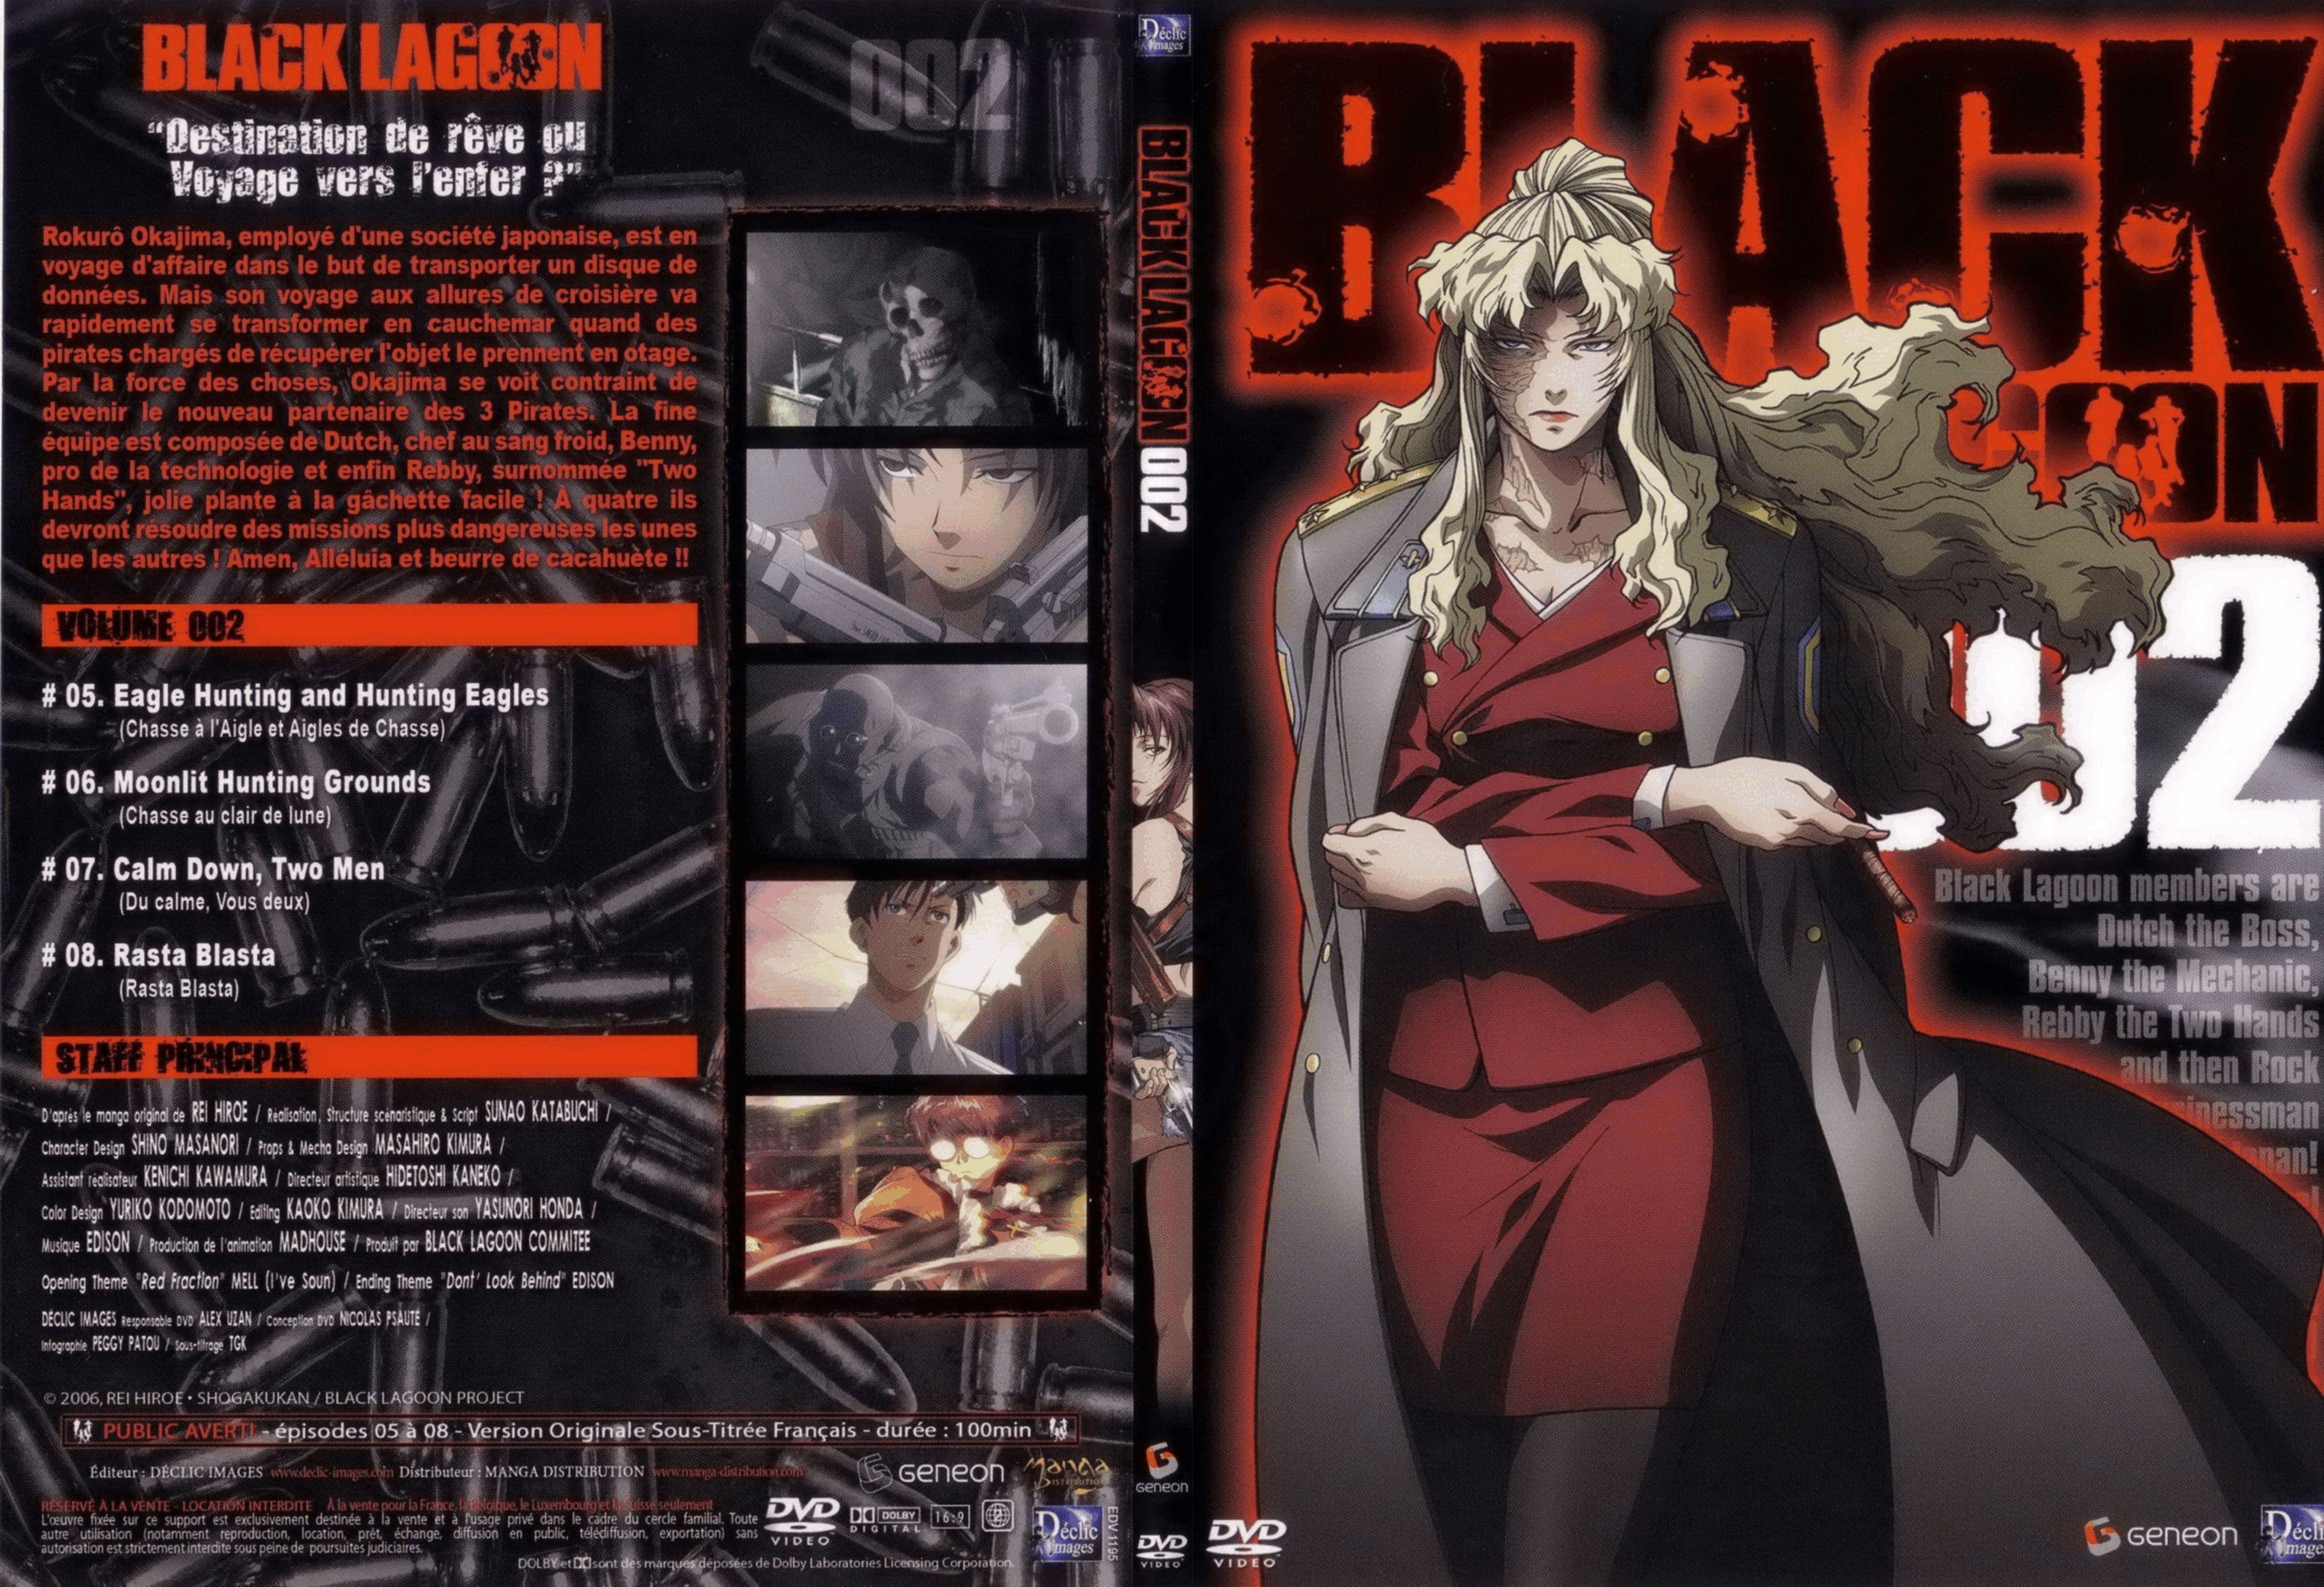 Jaquette DVD Black lagoon 002 - SLIM